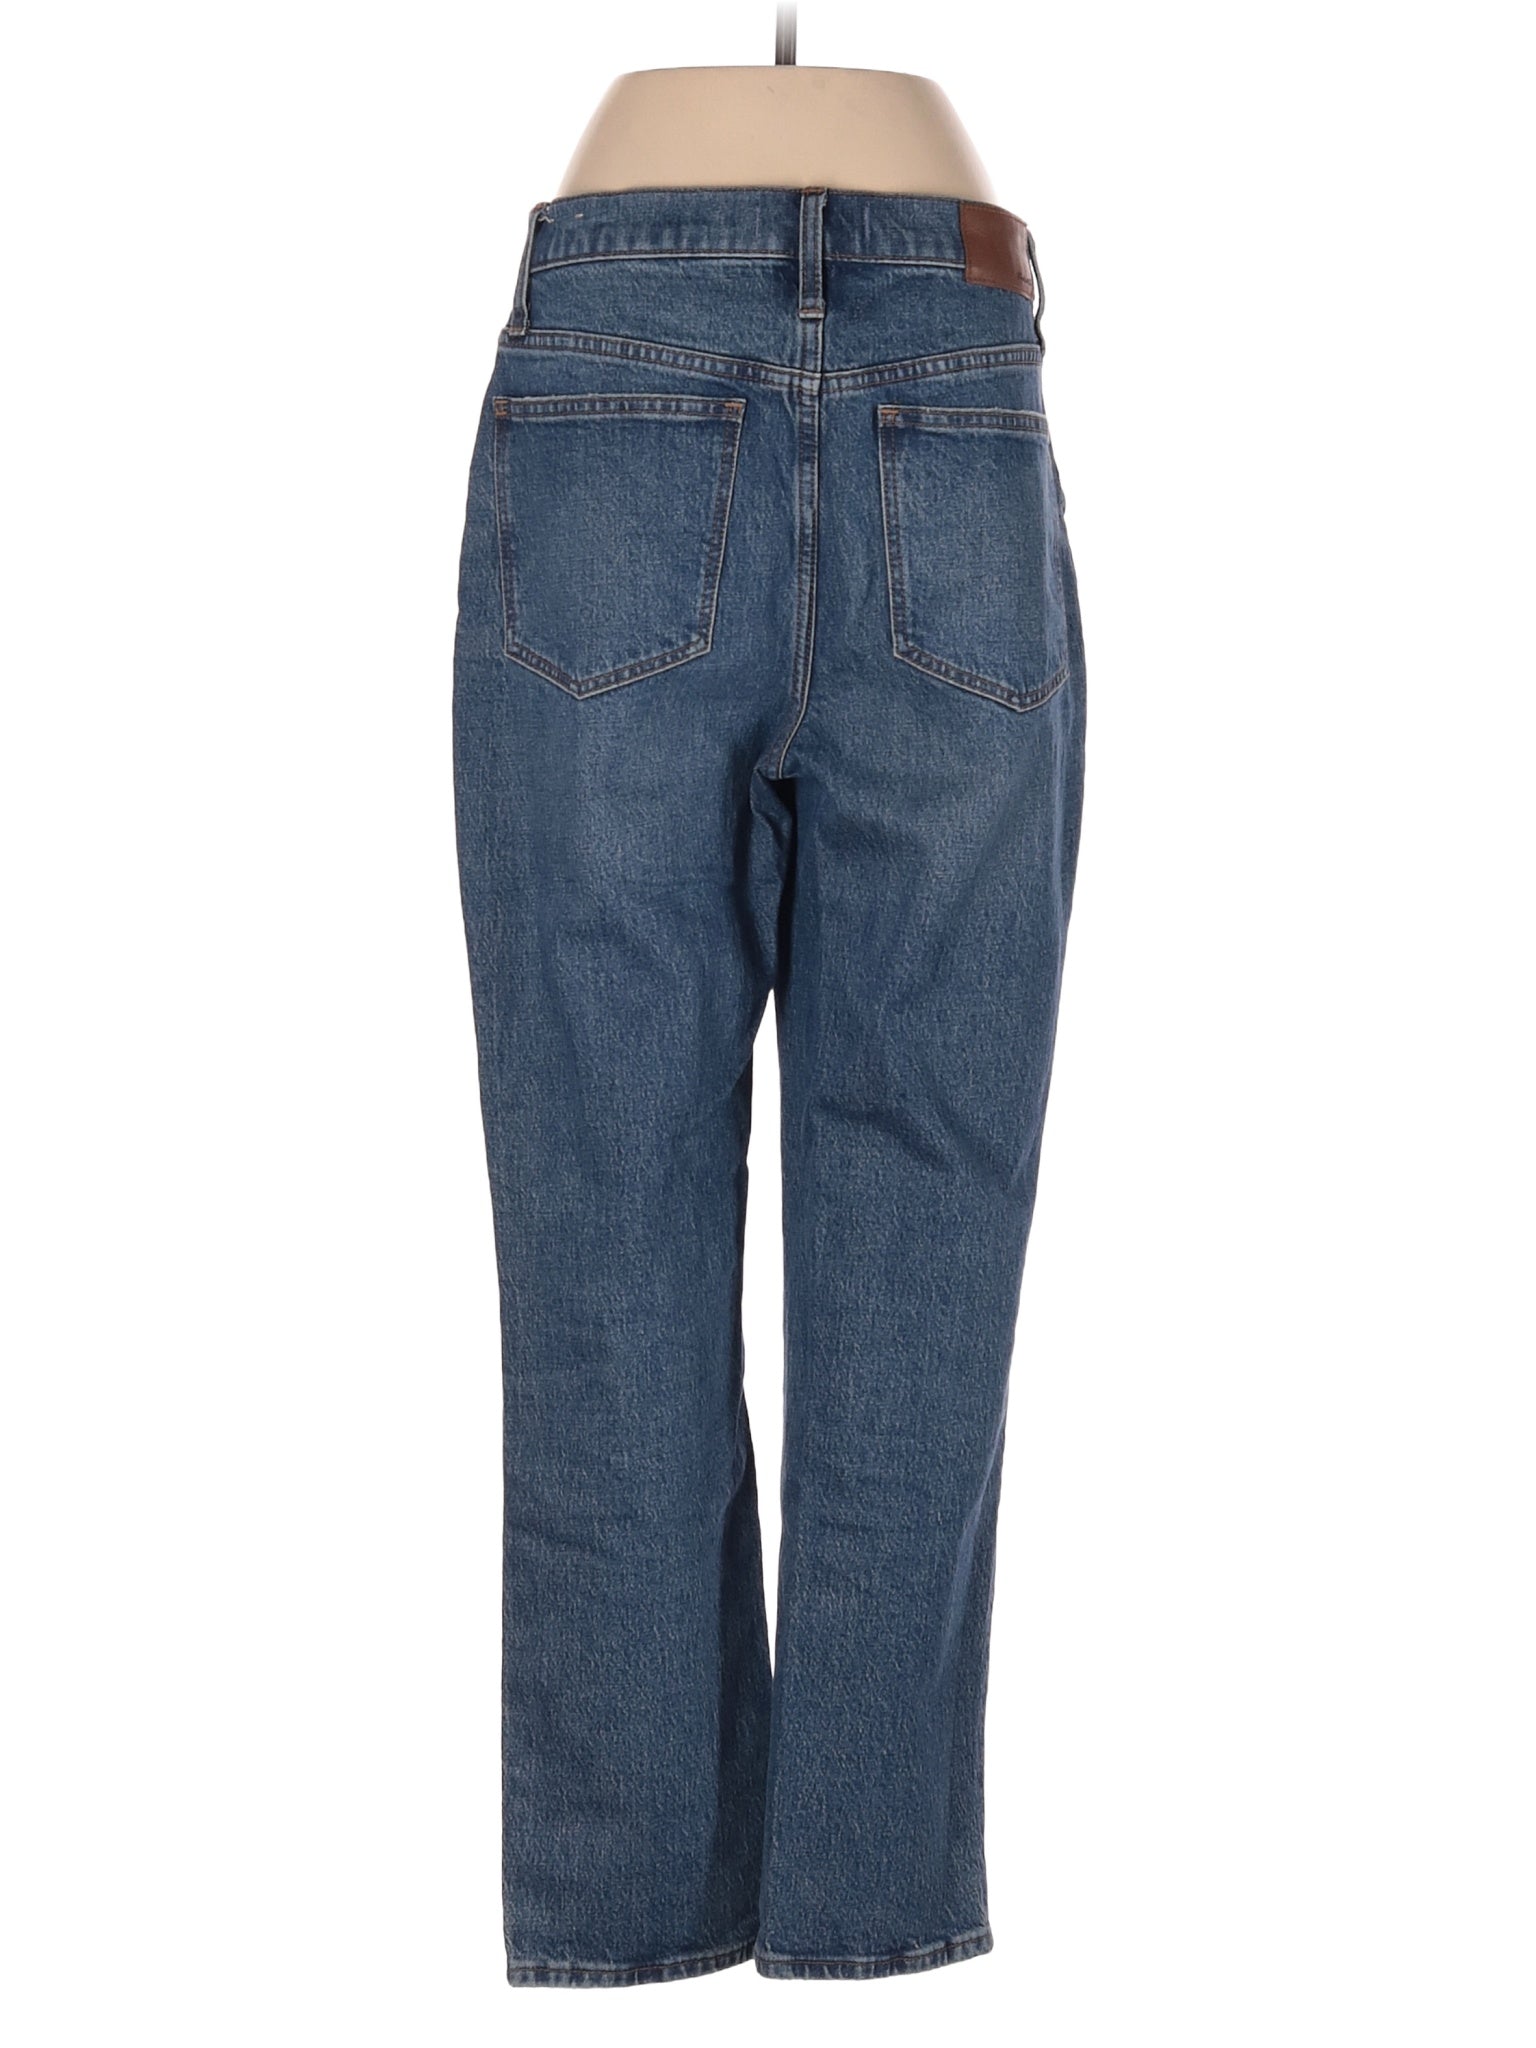 High-Rise Boyjeans Madewell Jeans 26 in Dark Wash waist size - 26